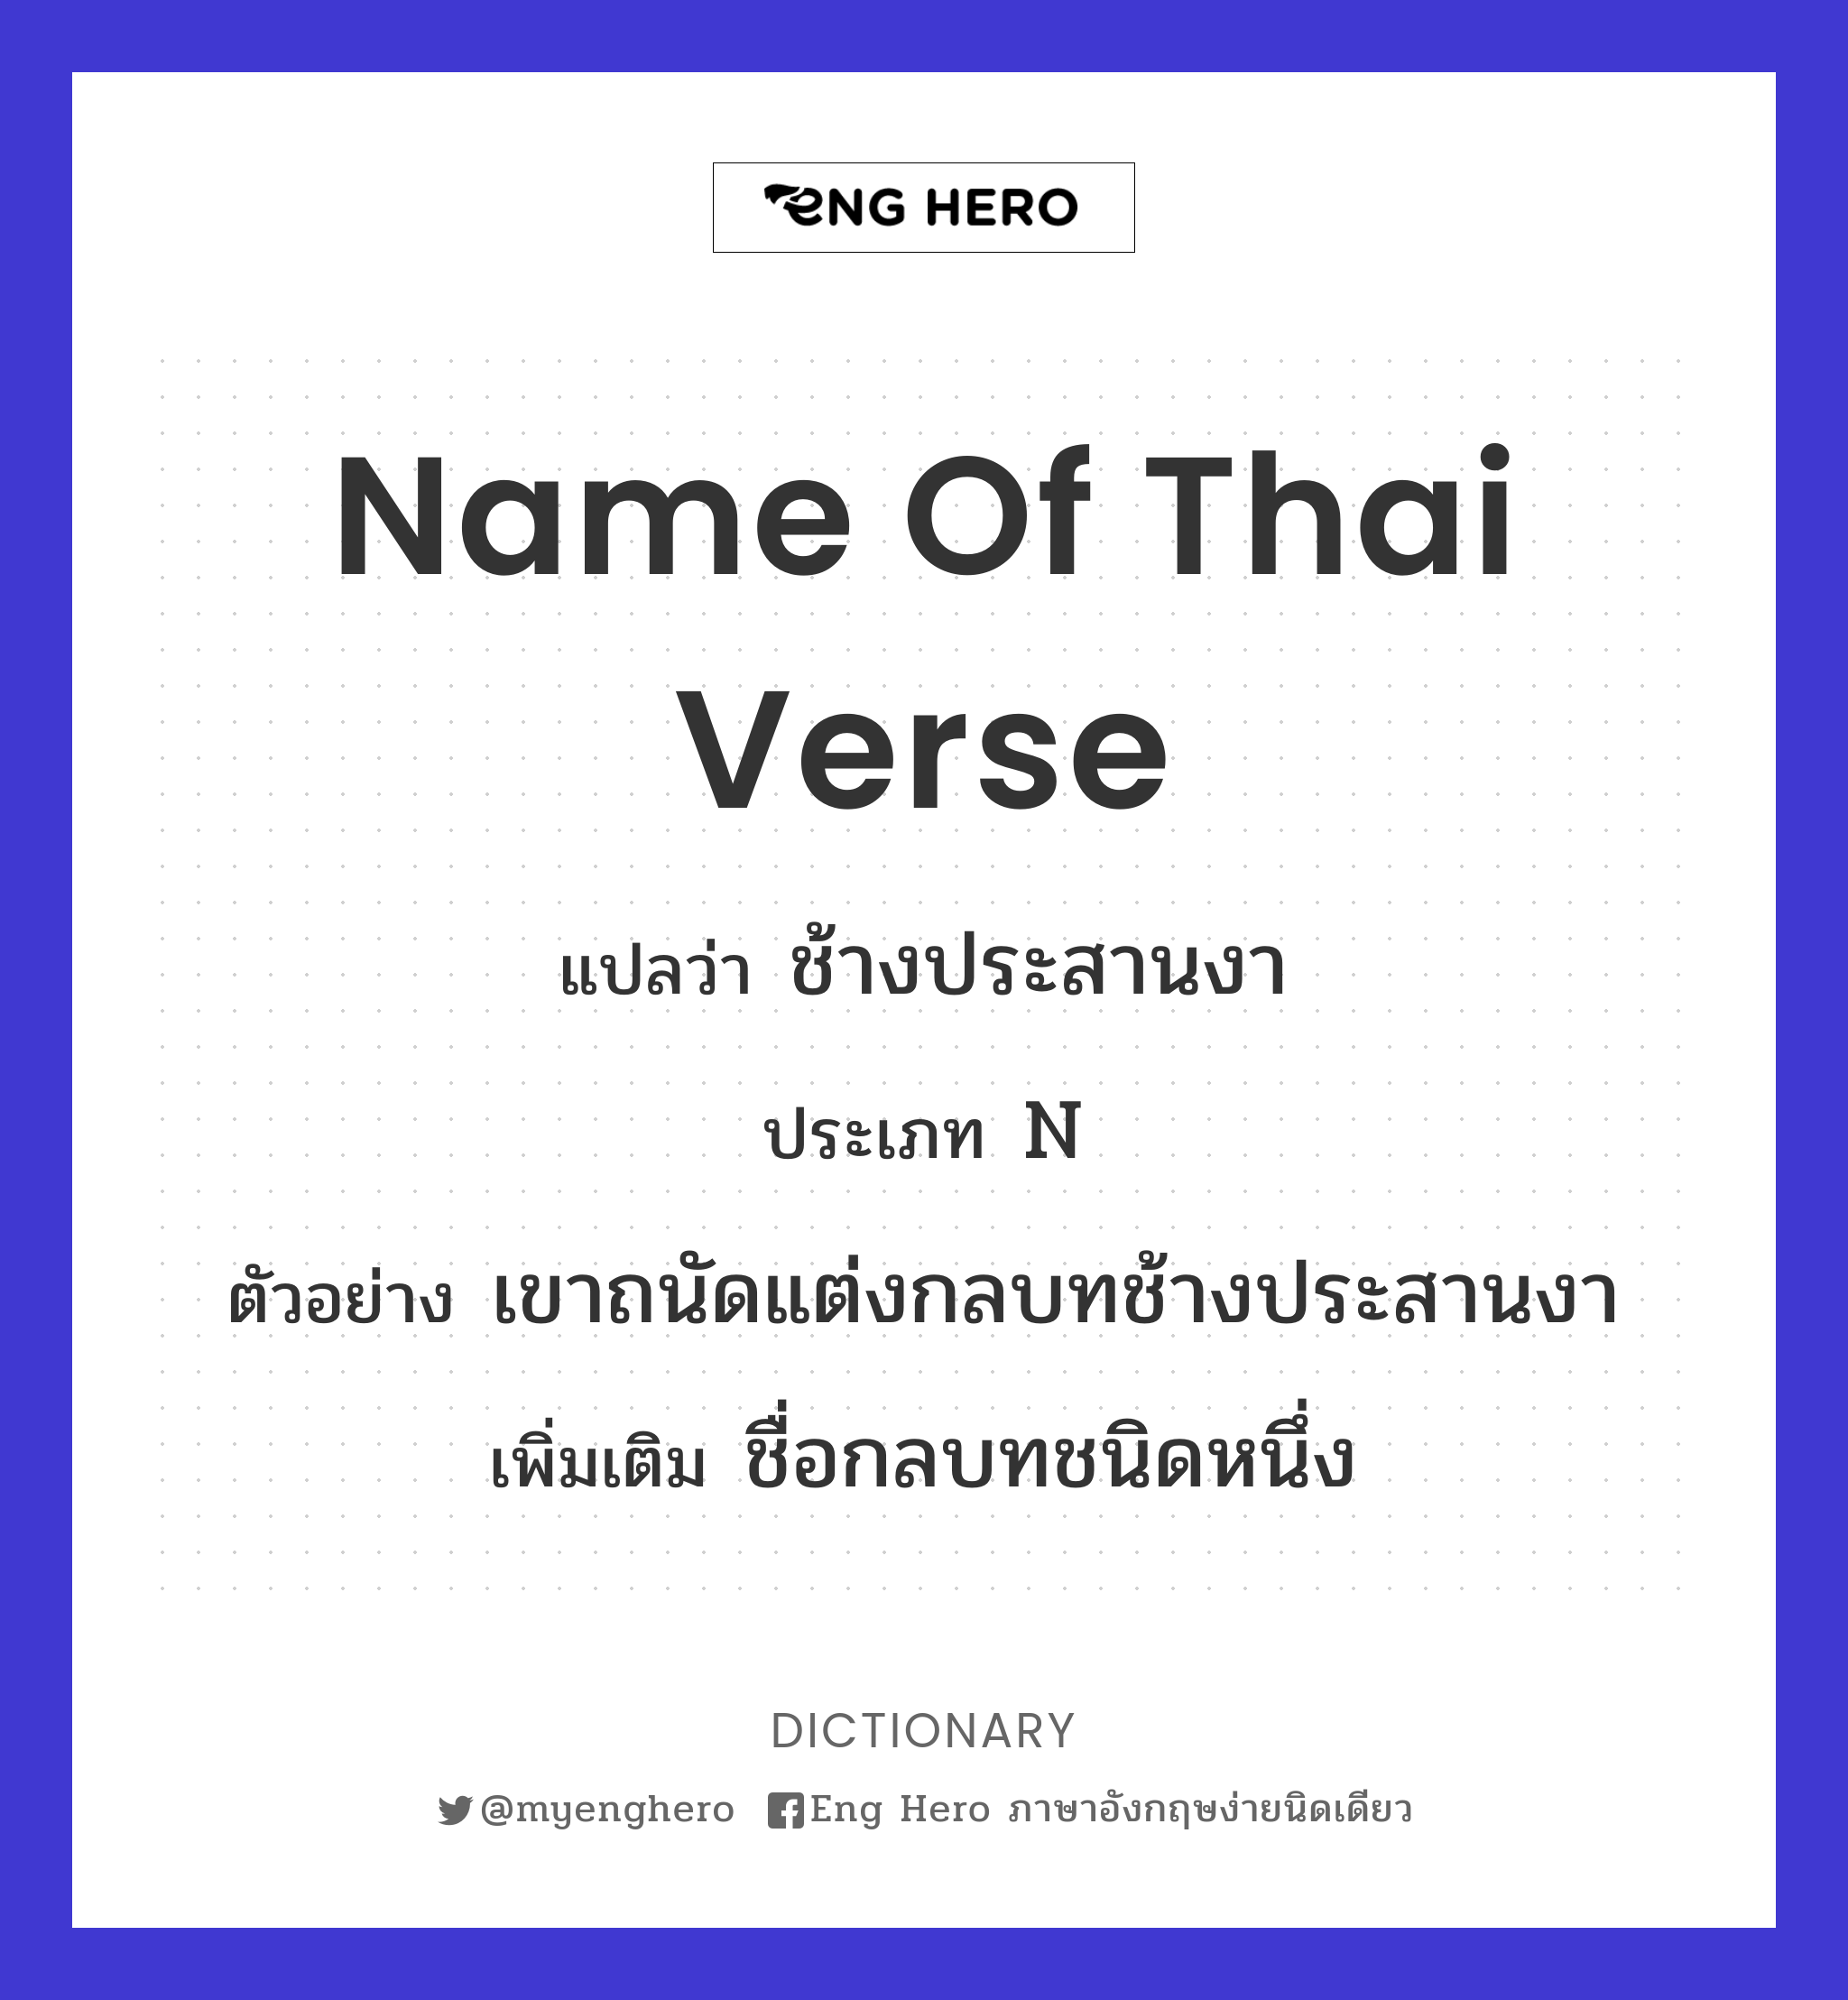 name of Thai verse